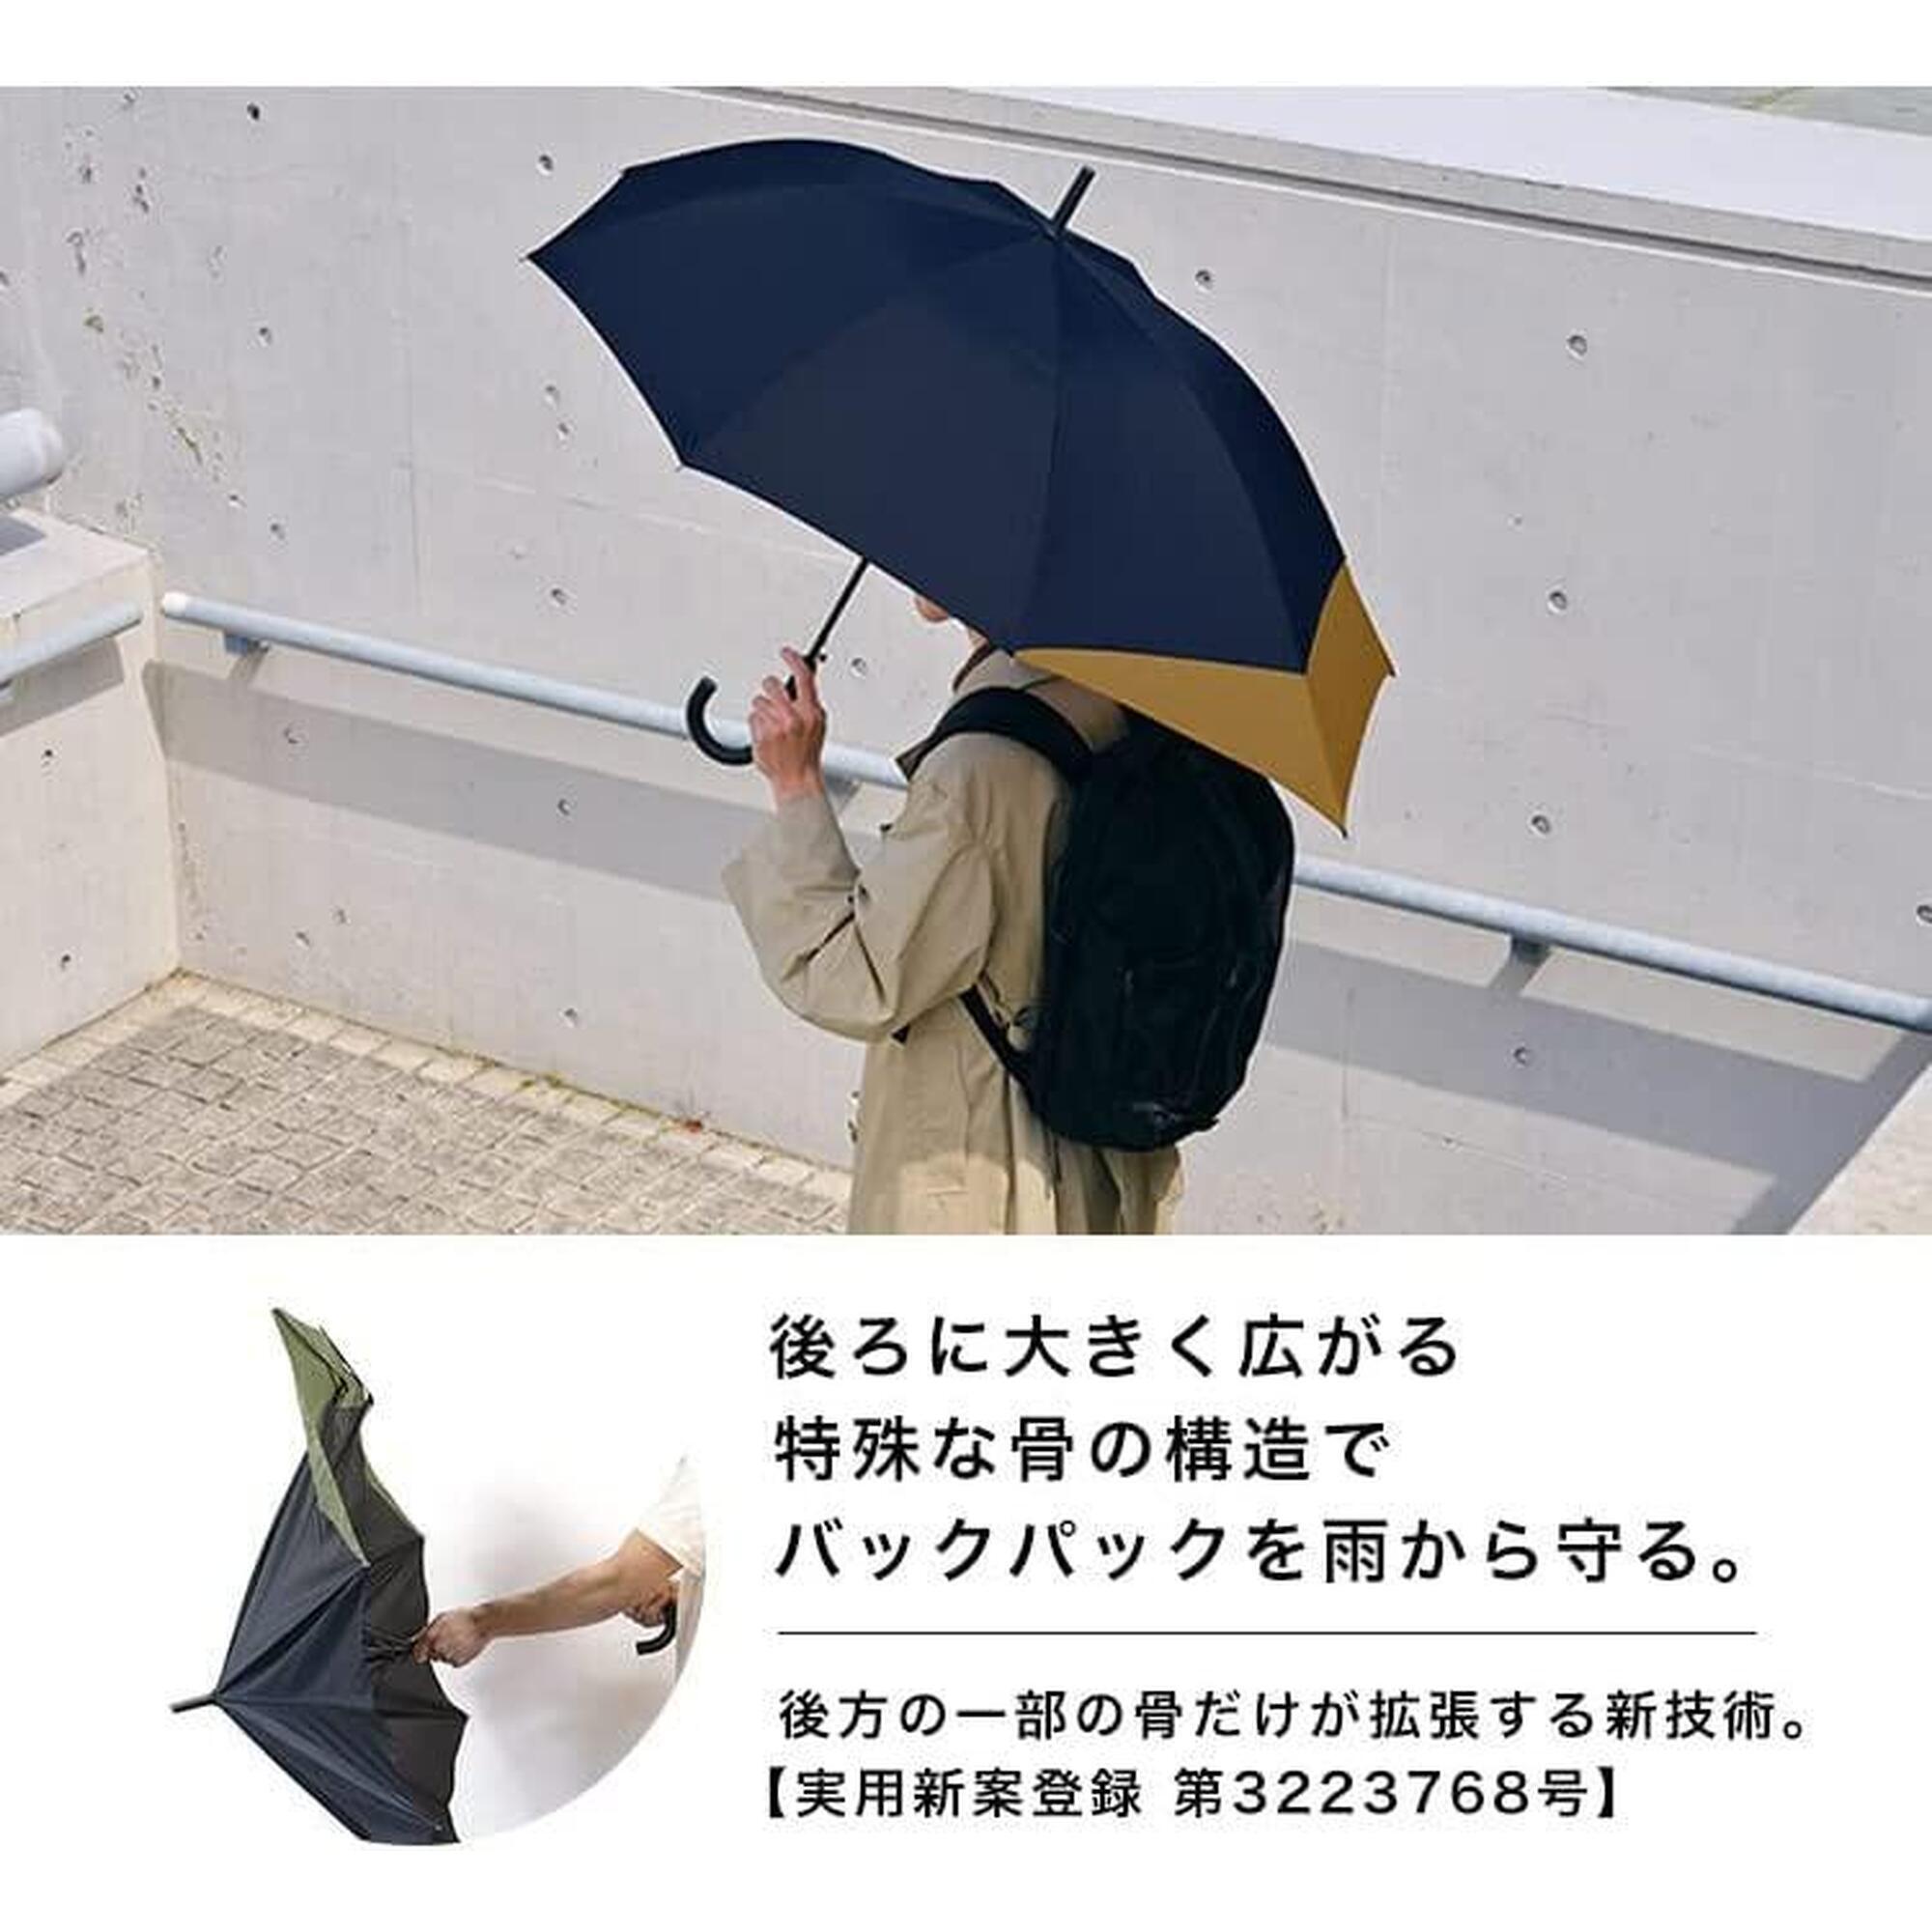 UX 戶外情侶長雨傘 - 黑及卡其